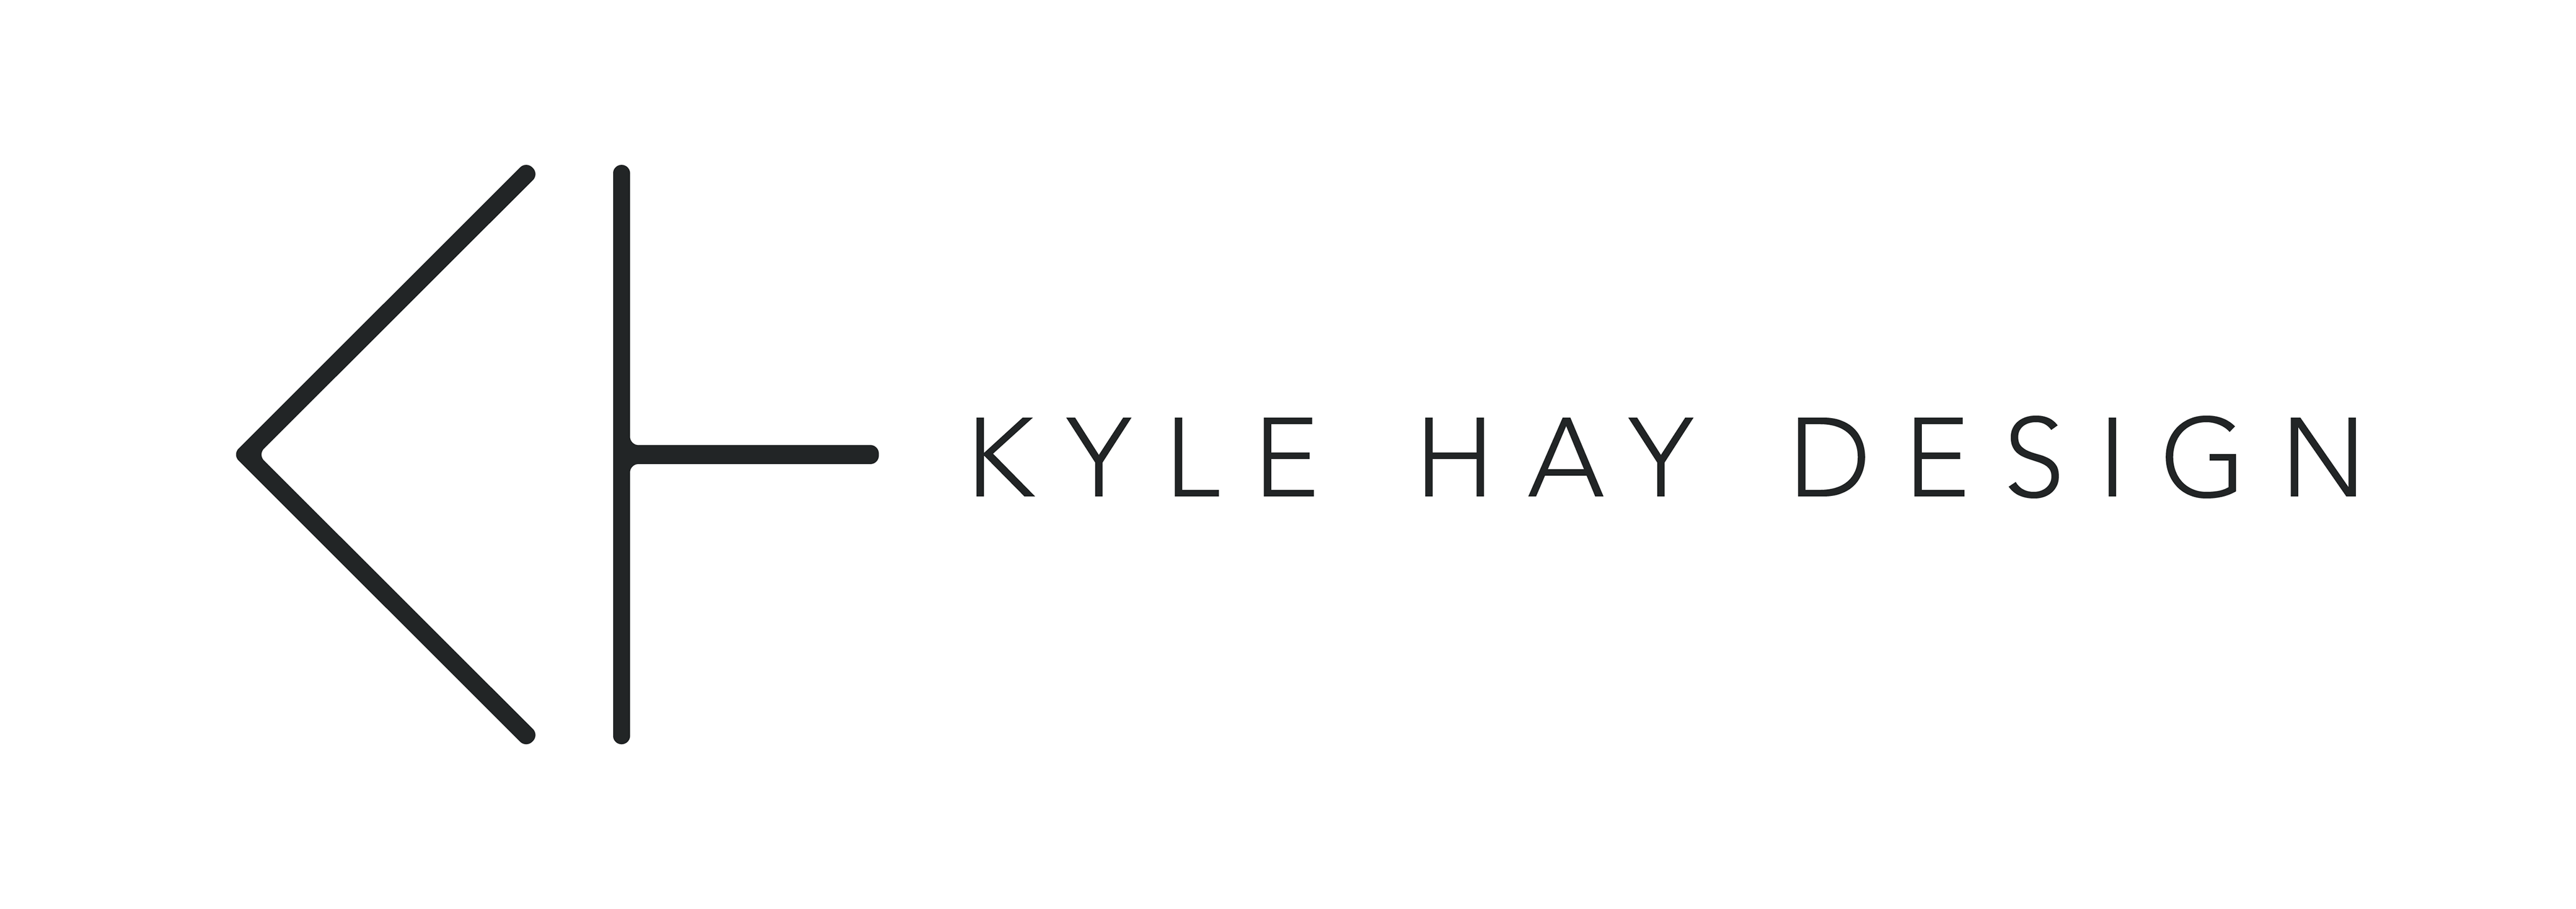 Kyle Hay